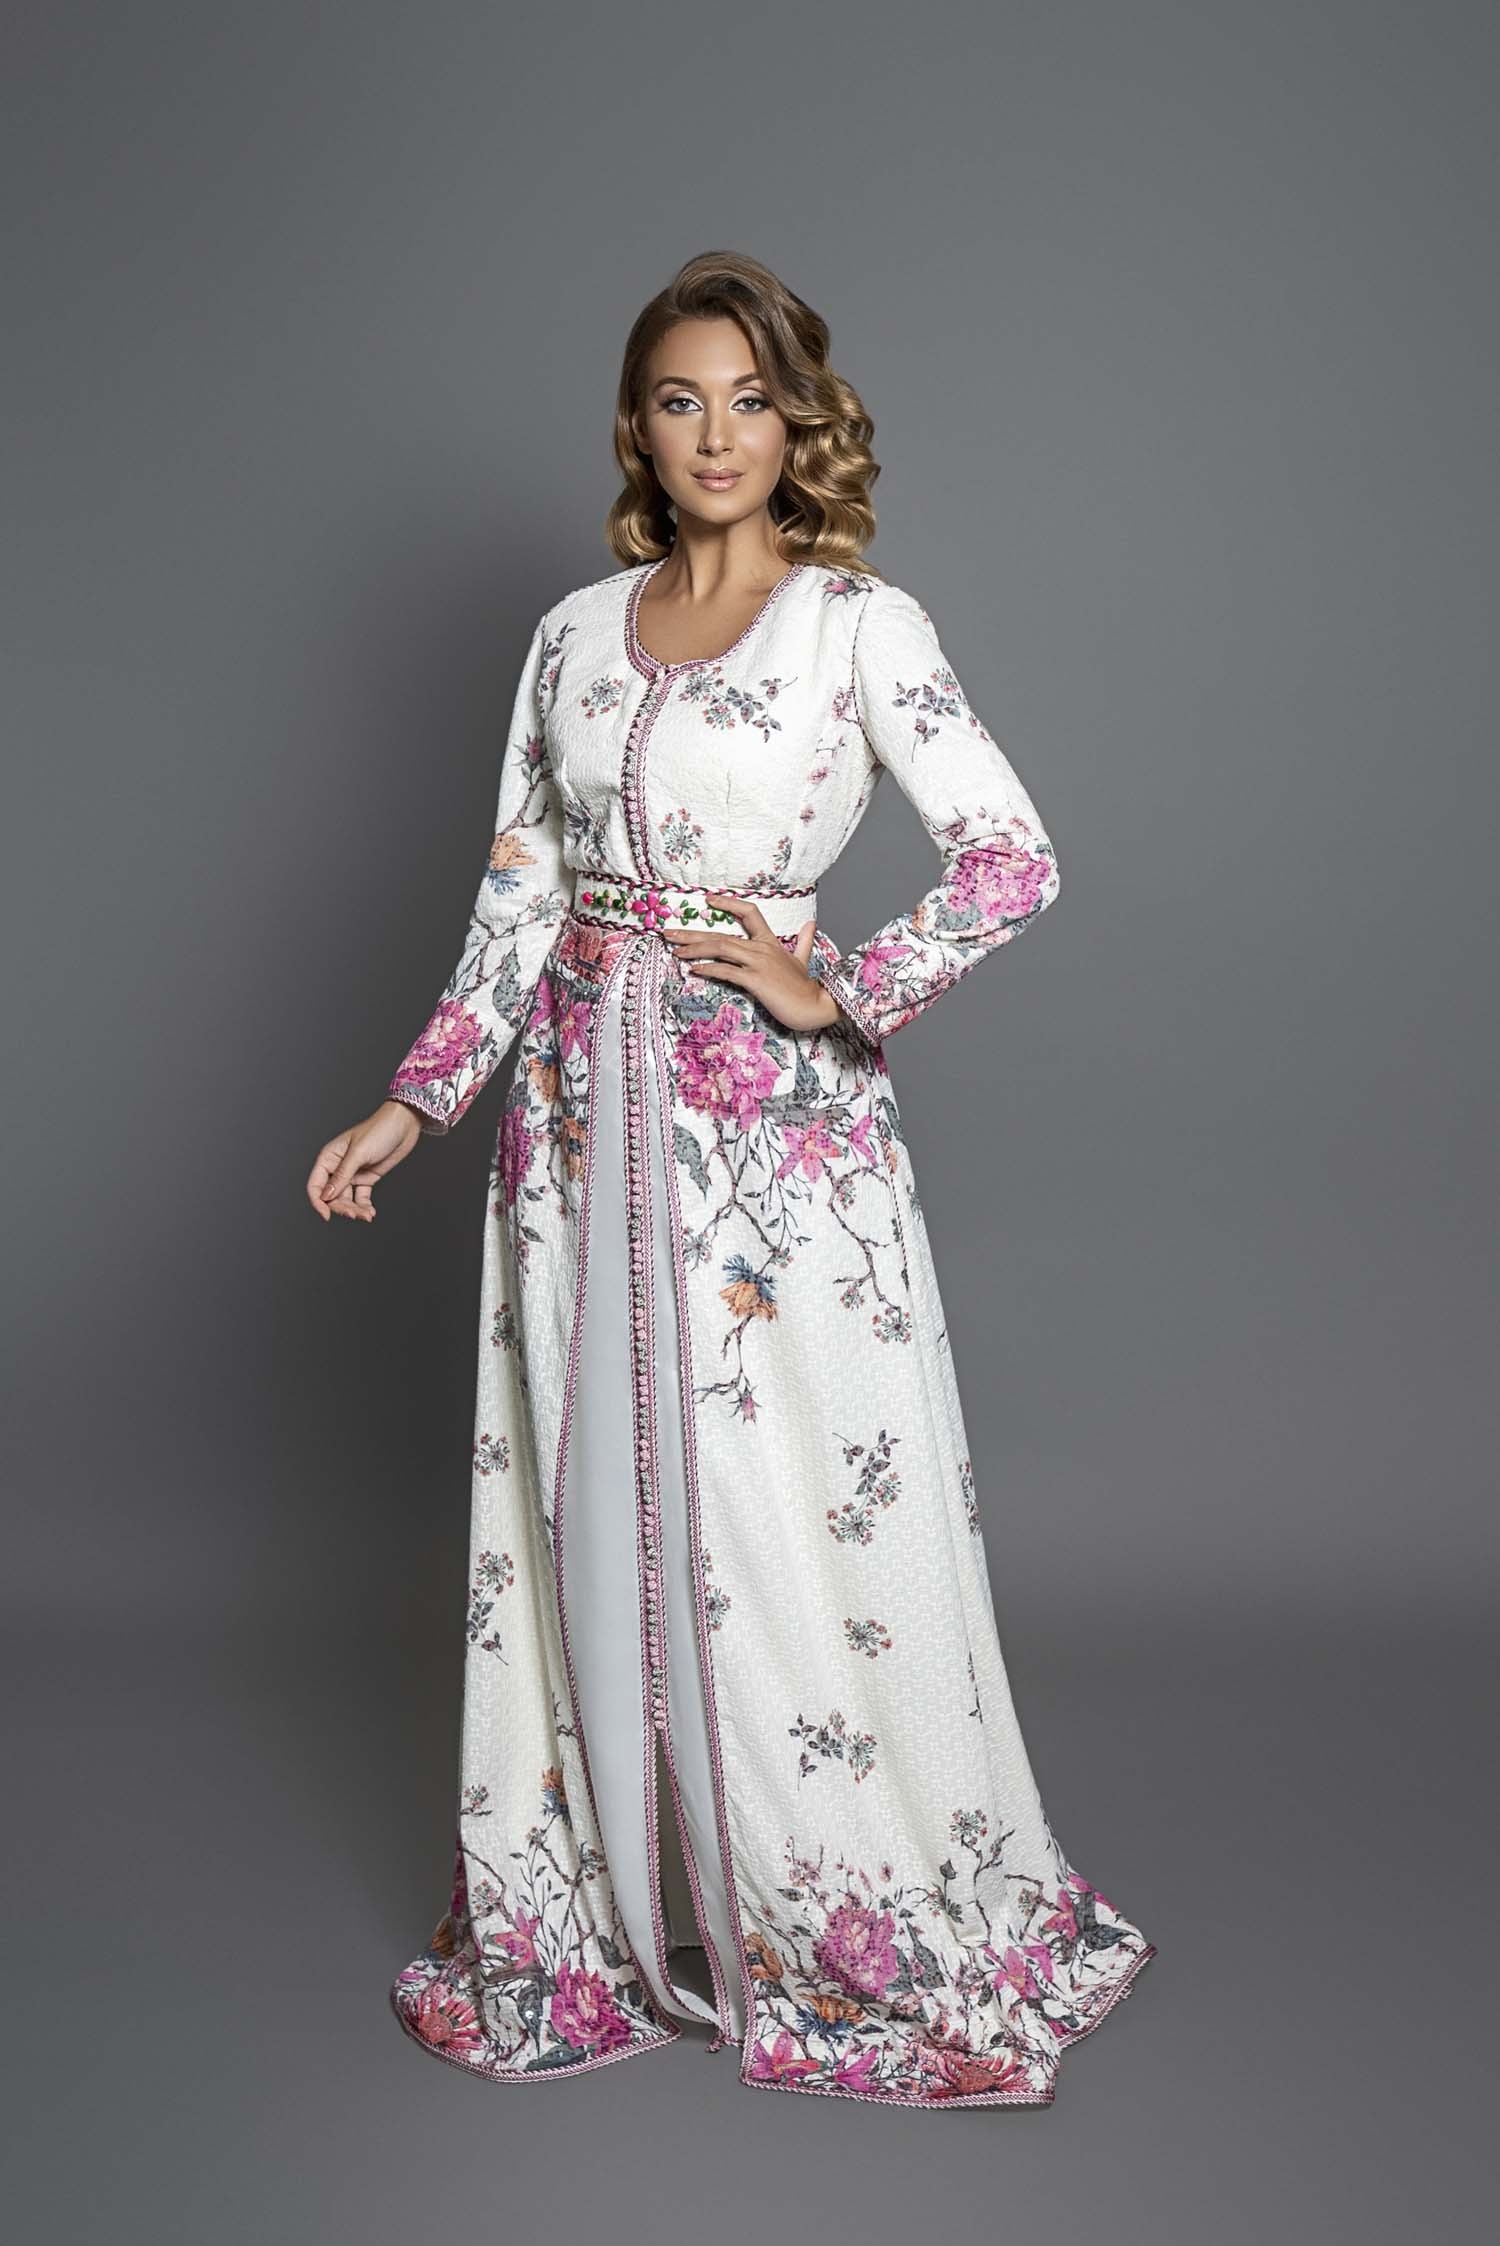 Mantel Van toepassing Bediening mogelijk Marokkaanse kaftan in bloemenstof, takchita-bloemen, voor bruid, bohemien  chic